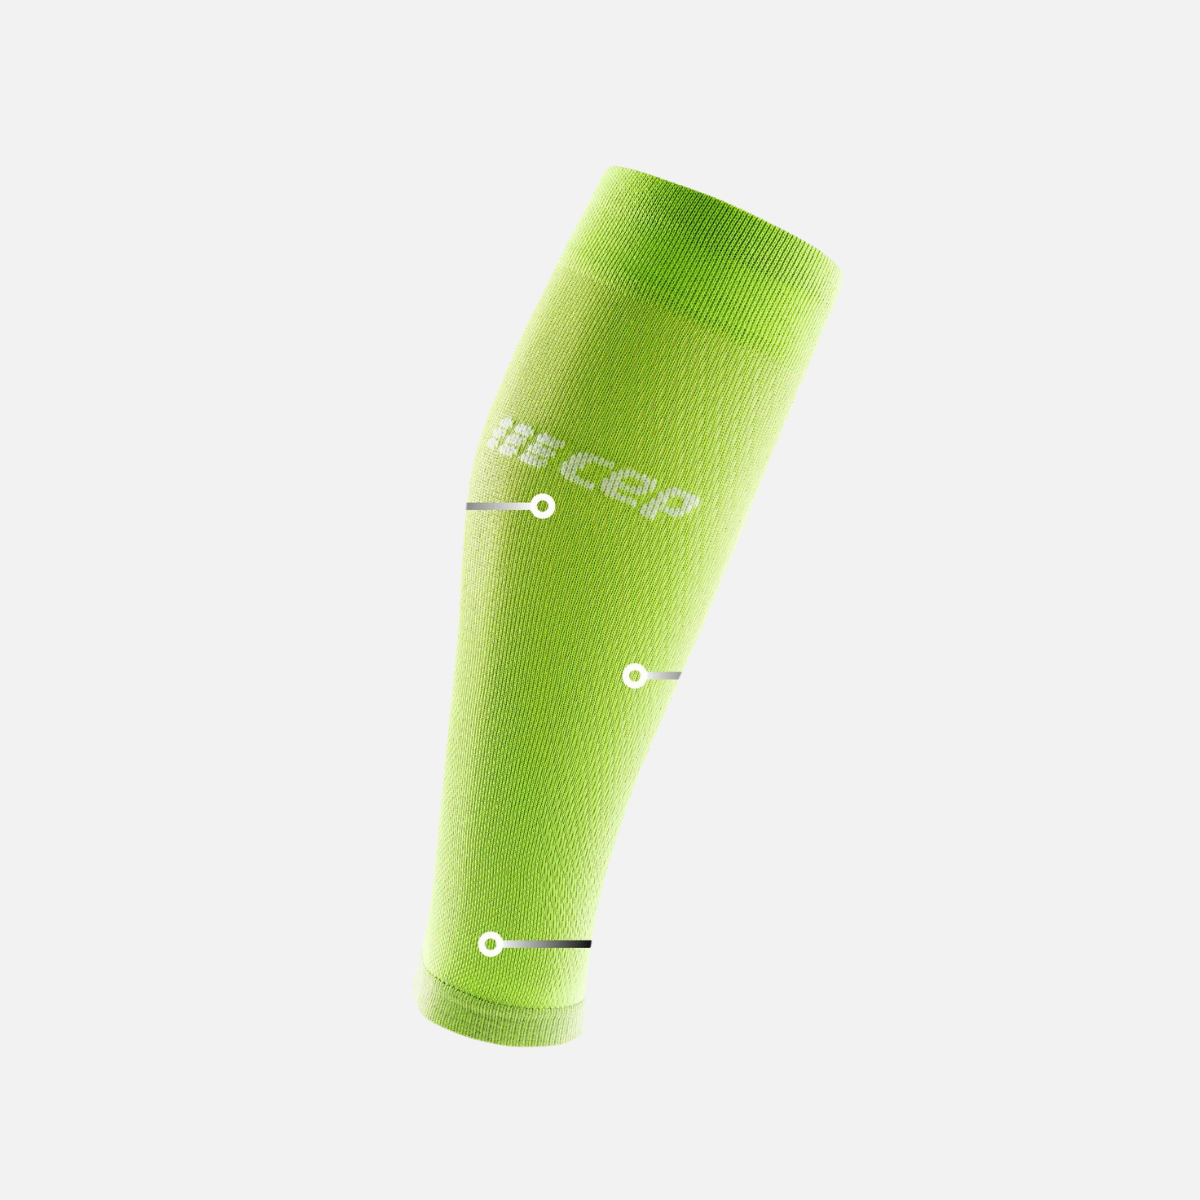 Cep Ultralight Compression Women Calf Sleeves - Flash Green